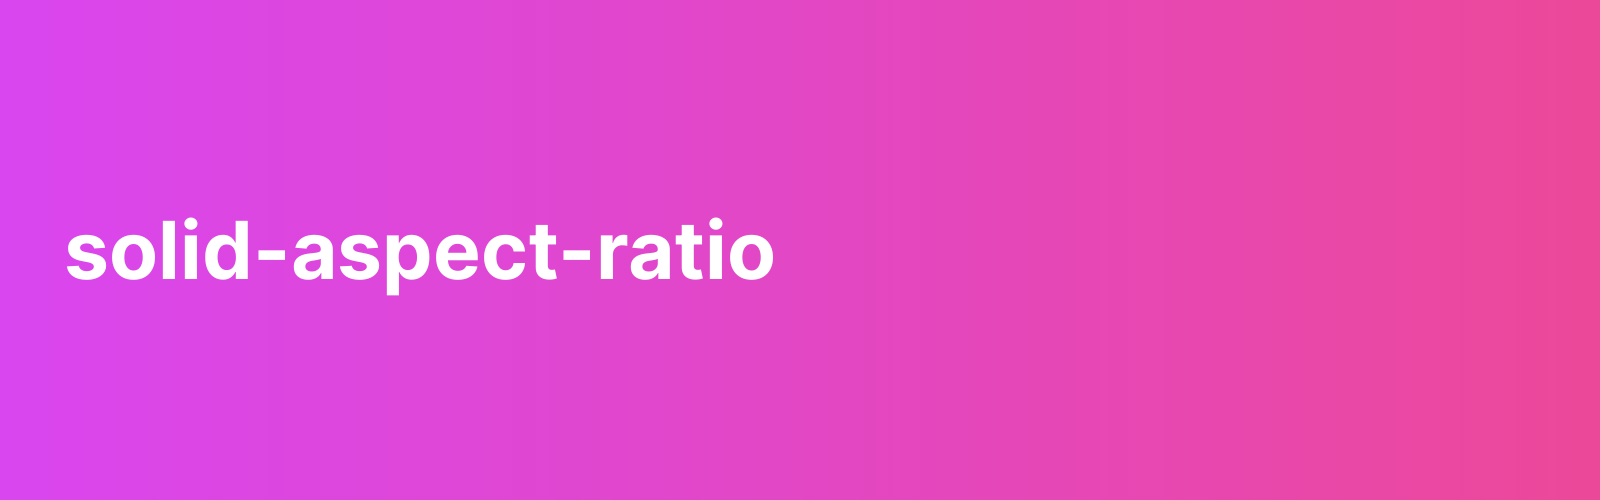 solid-aspect-ratio